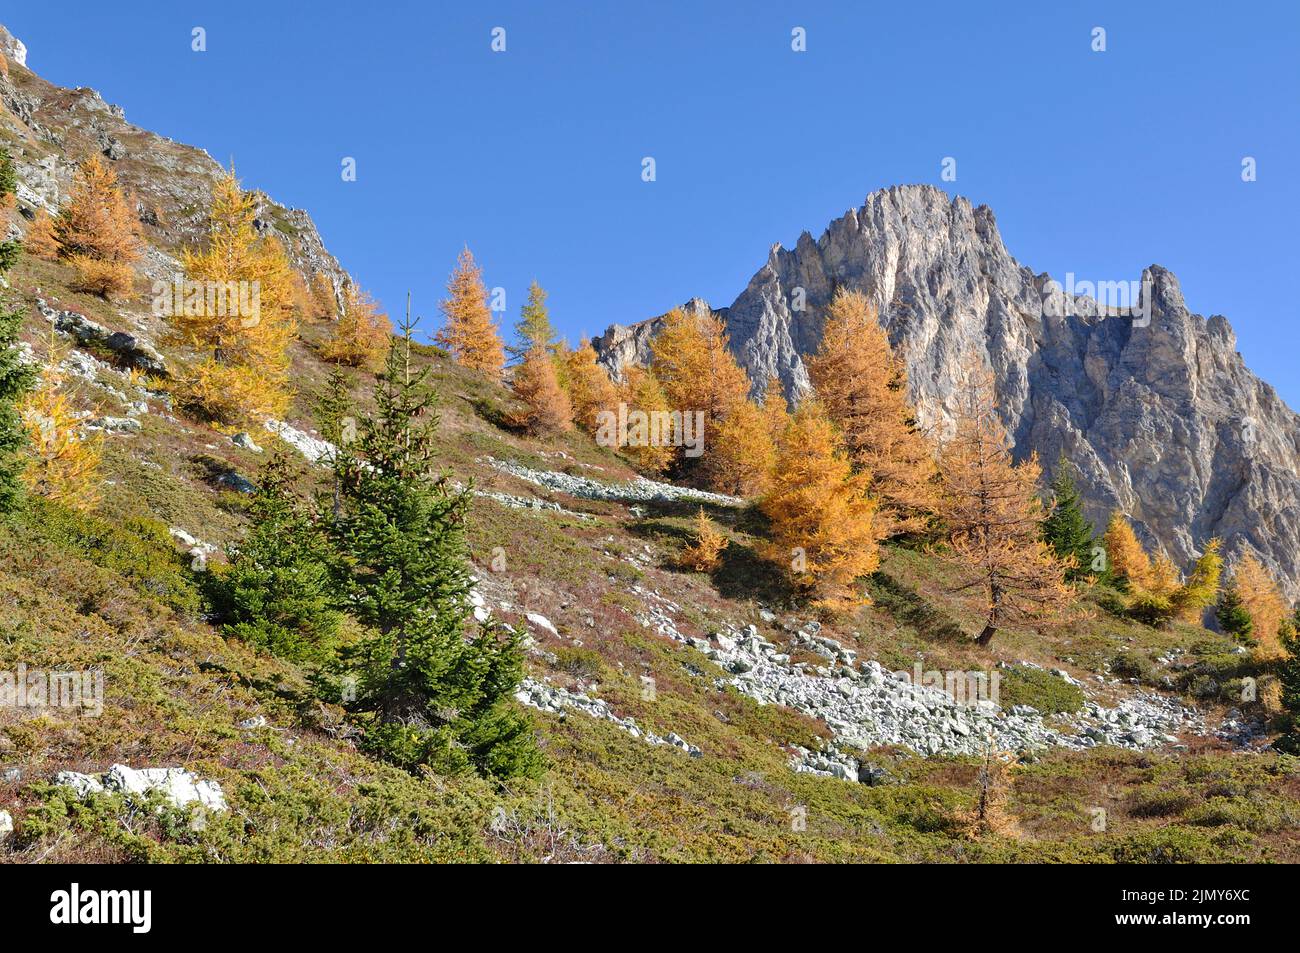 yellow  larche  trees in a beautiful rocky alpine mountain under blue sky in autumn season Stock Photo